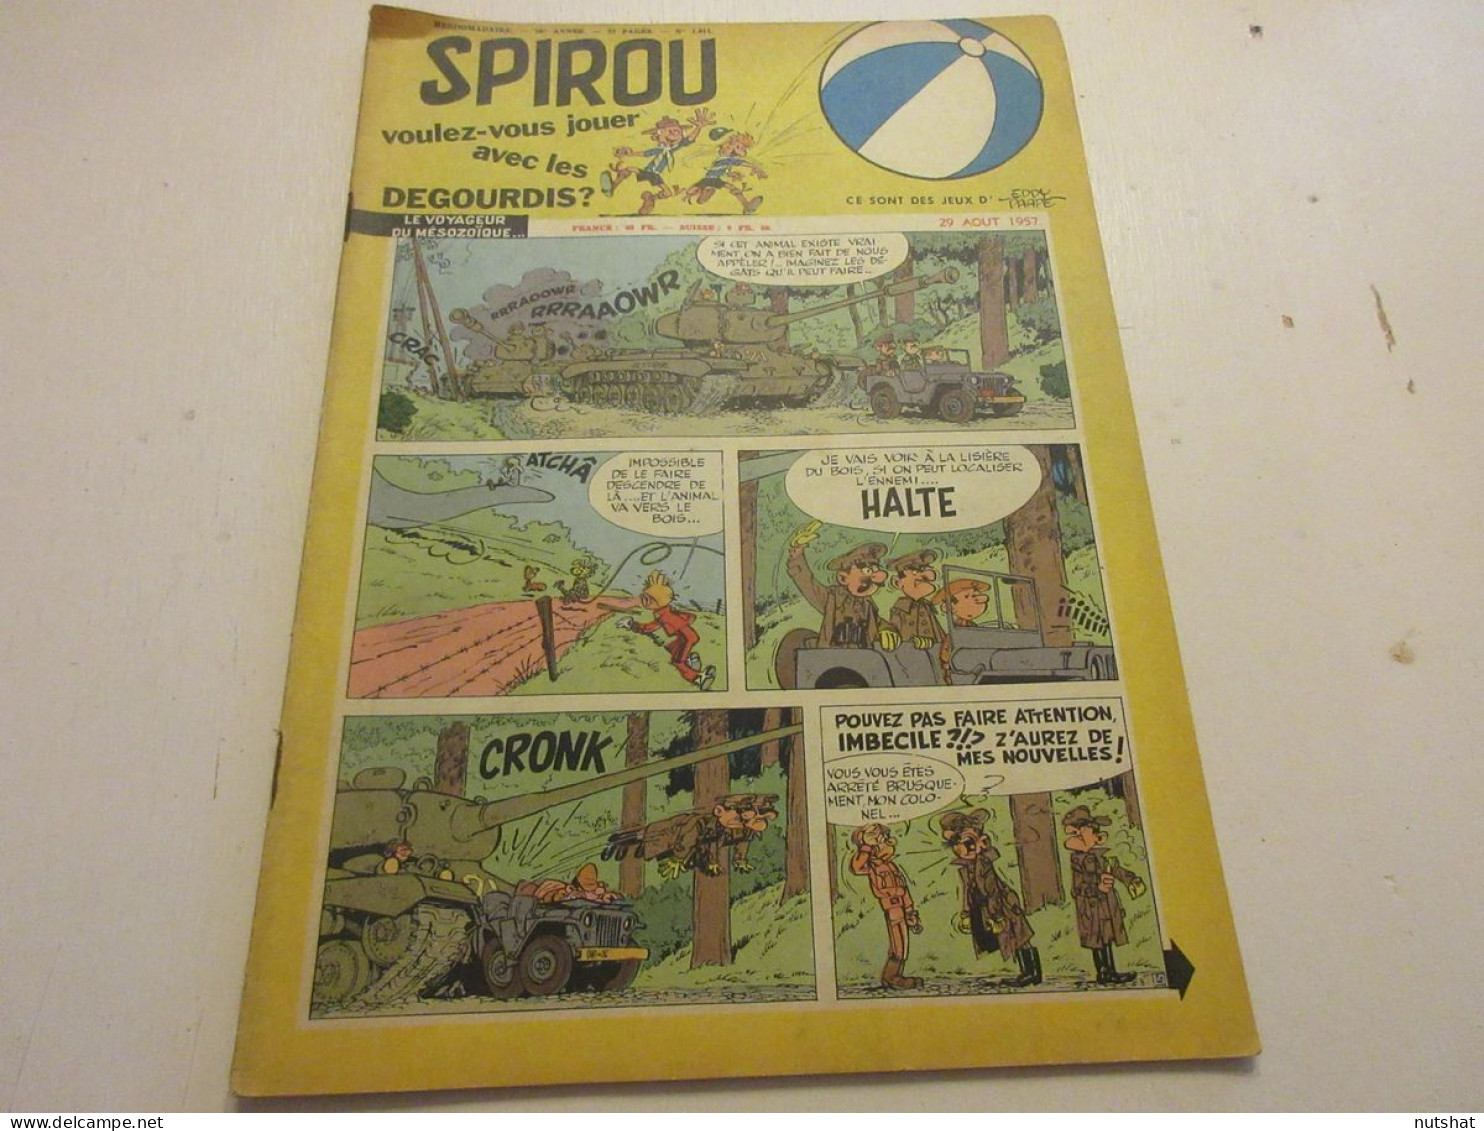 SPIROU 1011 29.08.1957 L'ATOMIUM BRUXELLES 1958 FOOTBALL SAINT ETIENNE           - Spirou Magazine